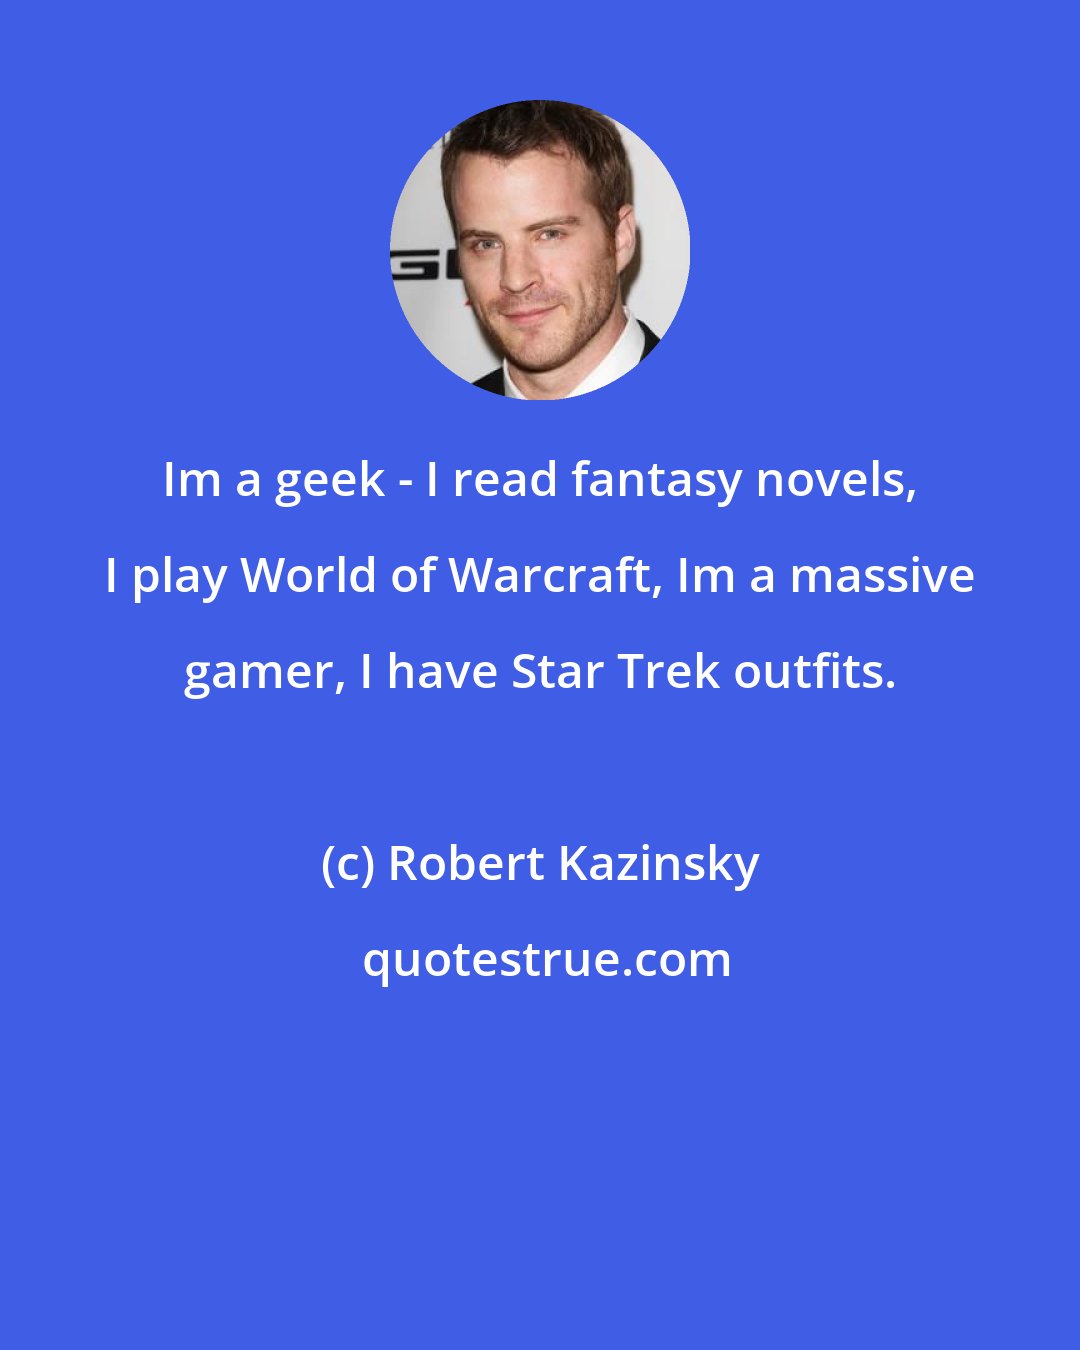 Robert Kazinsky: Im a geek - I read fantasy novels, I play World of Warcraft, Im a massive gamer, I have Star Trek outfits.